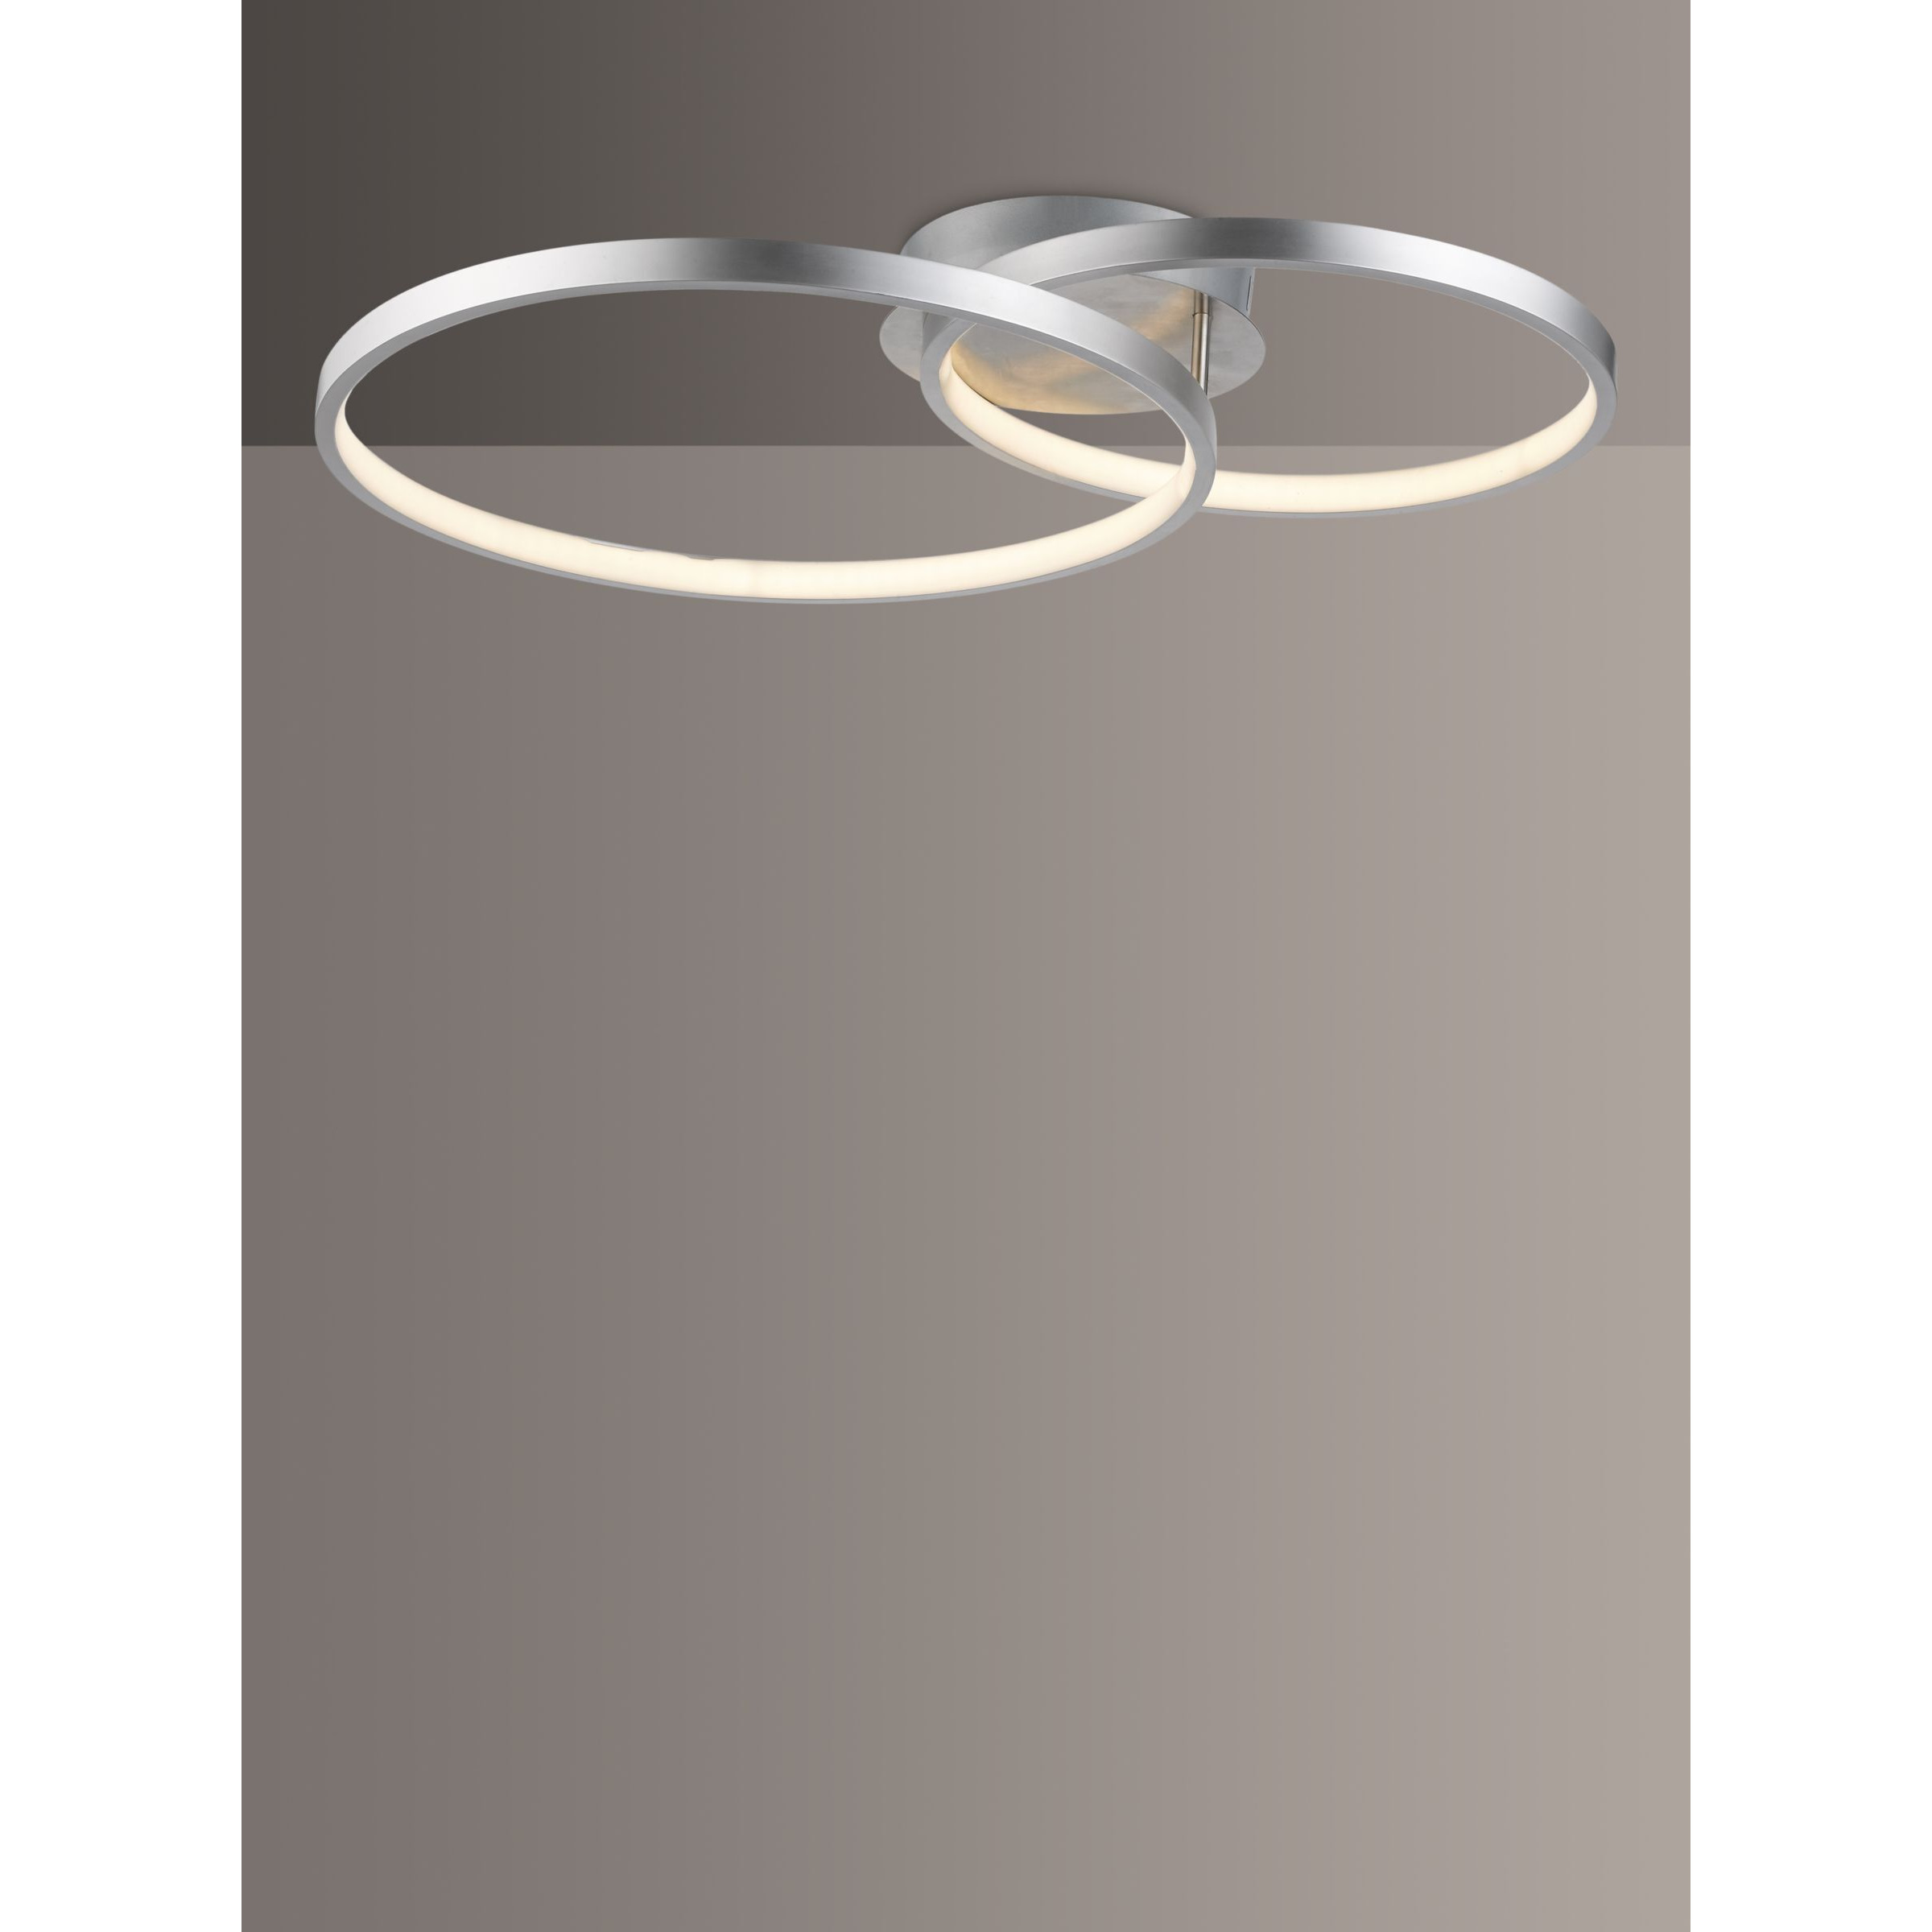 John Lewis Dual Hoop LED Semi Flush Ceiling Light, Nickel - image 1